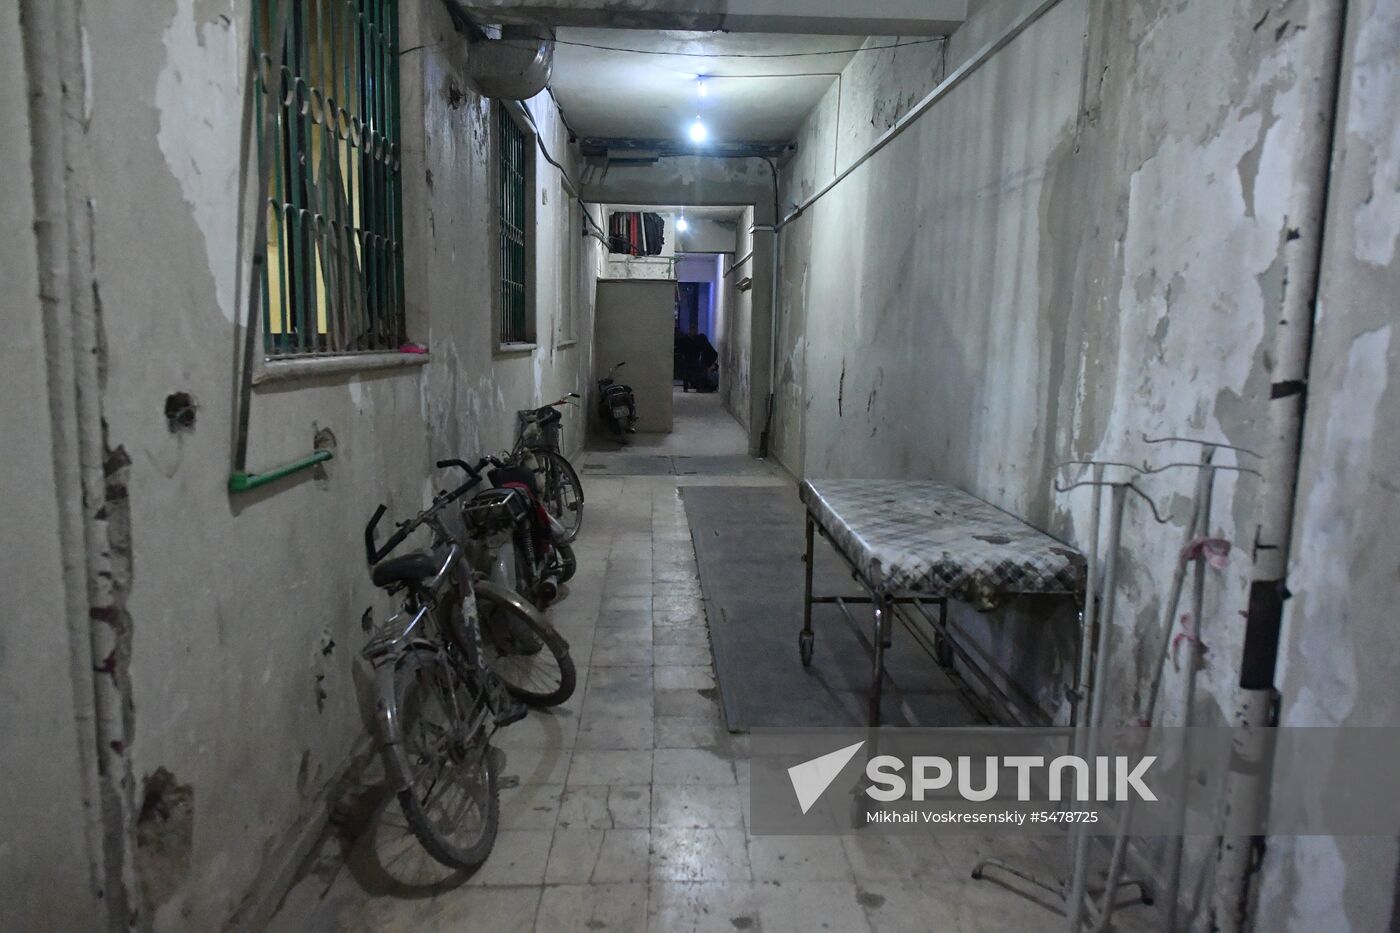 Underground hospital in Douma, Syria